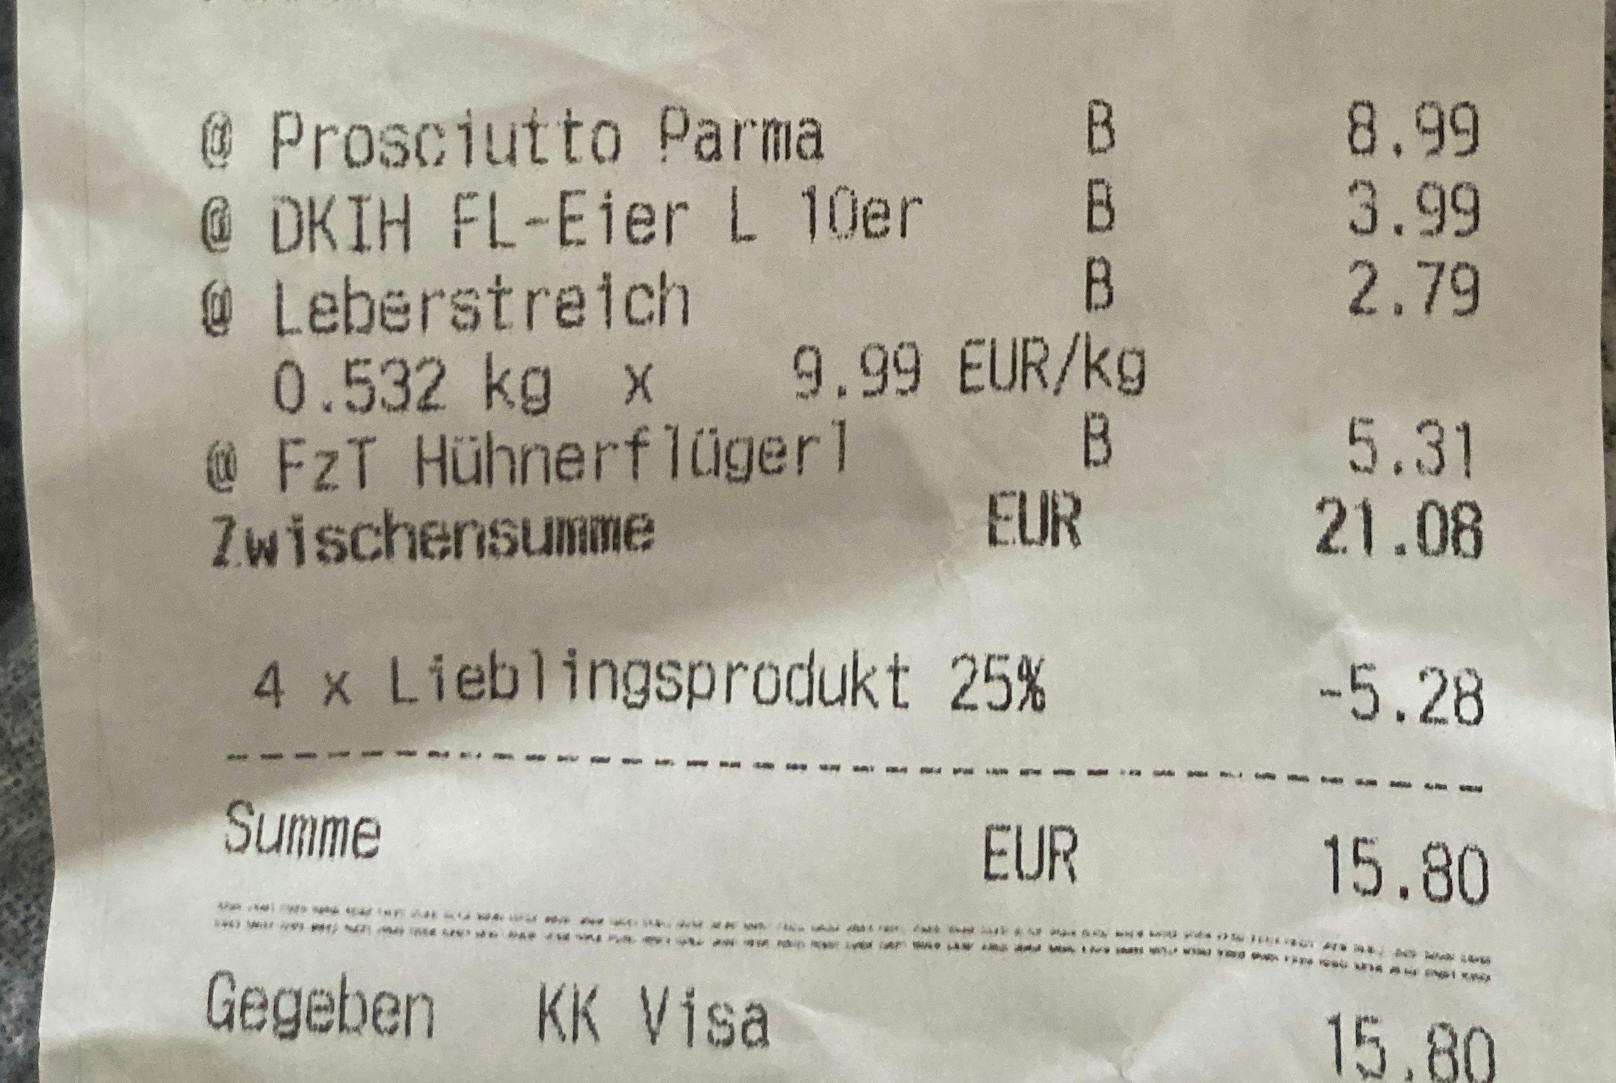 Der Prosciutto di Parma kostet beim Delikatessen-Supermarkt 8,99 Euro.